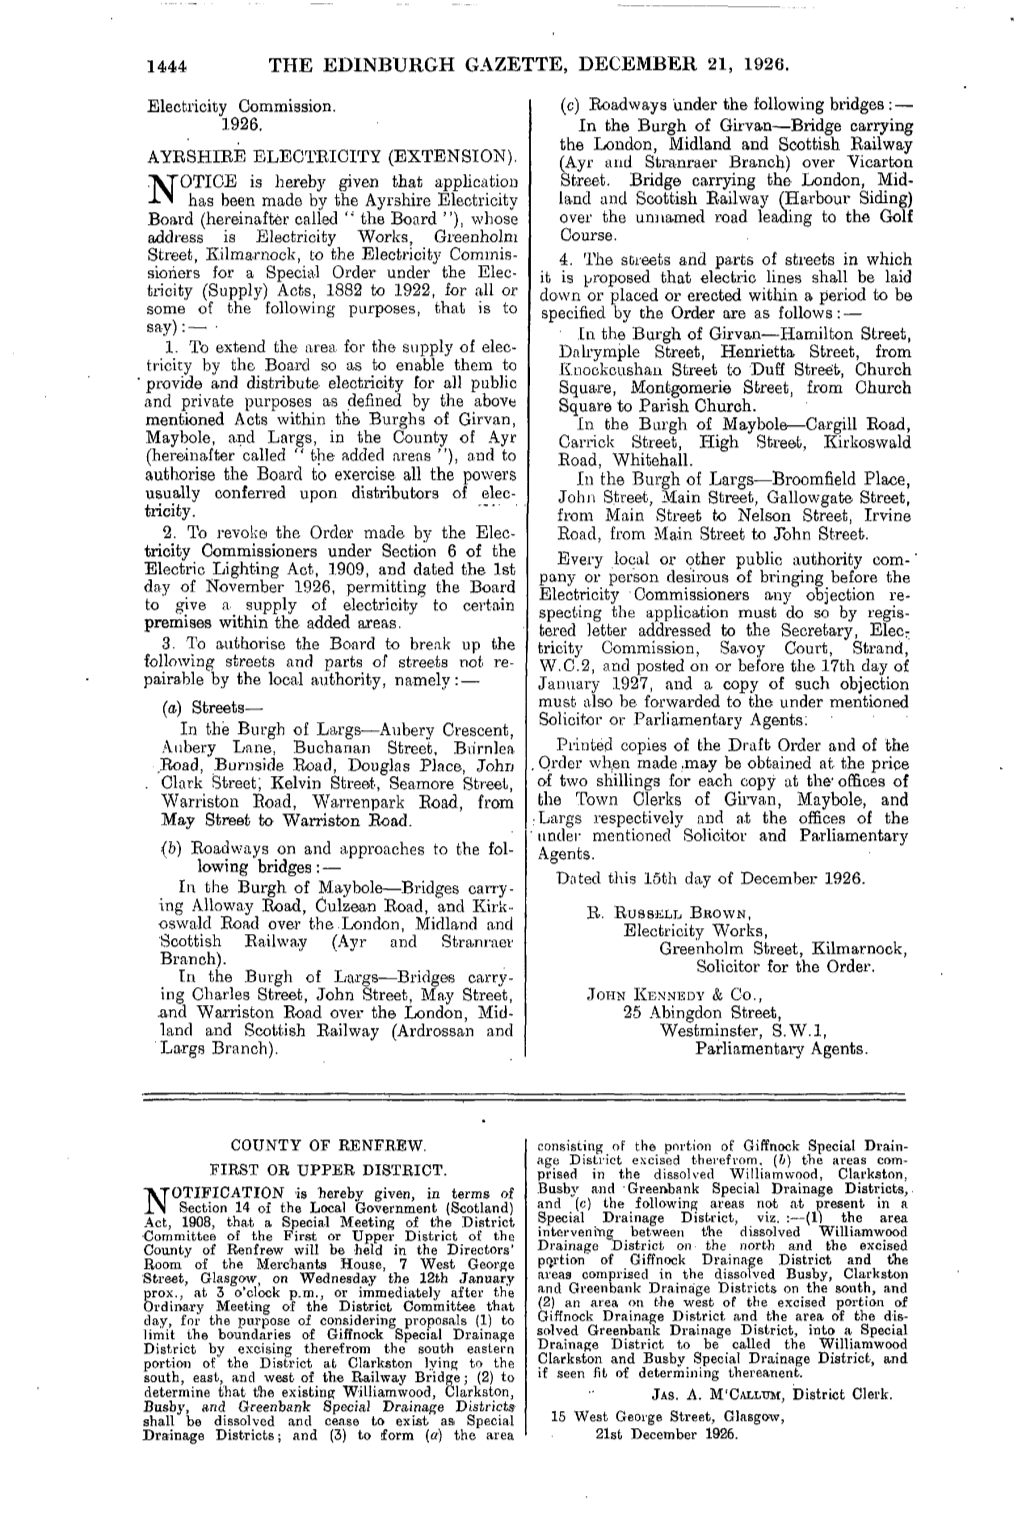 The Edinburgh Gazette, December 21, 1926